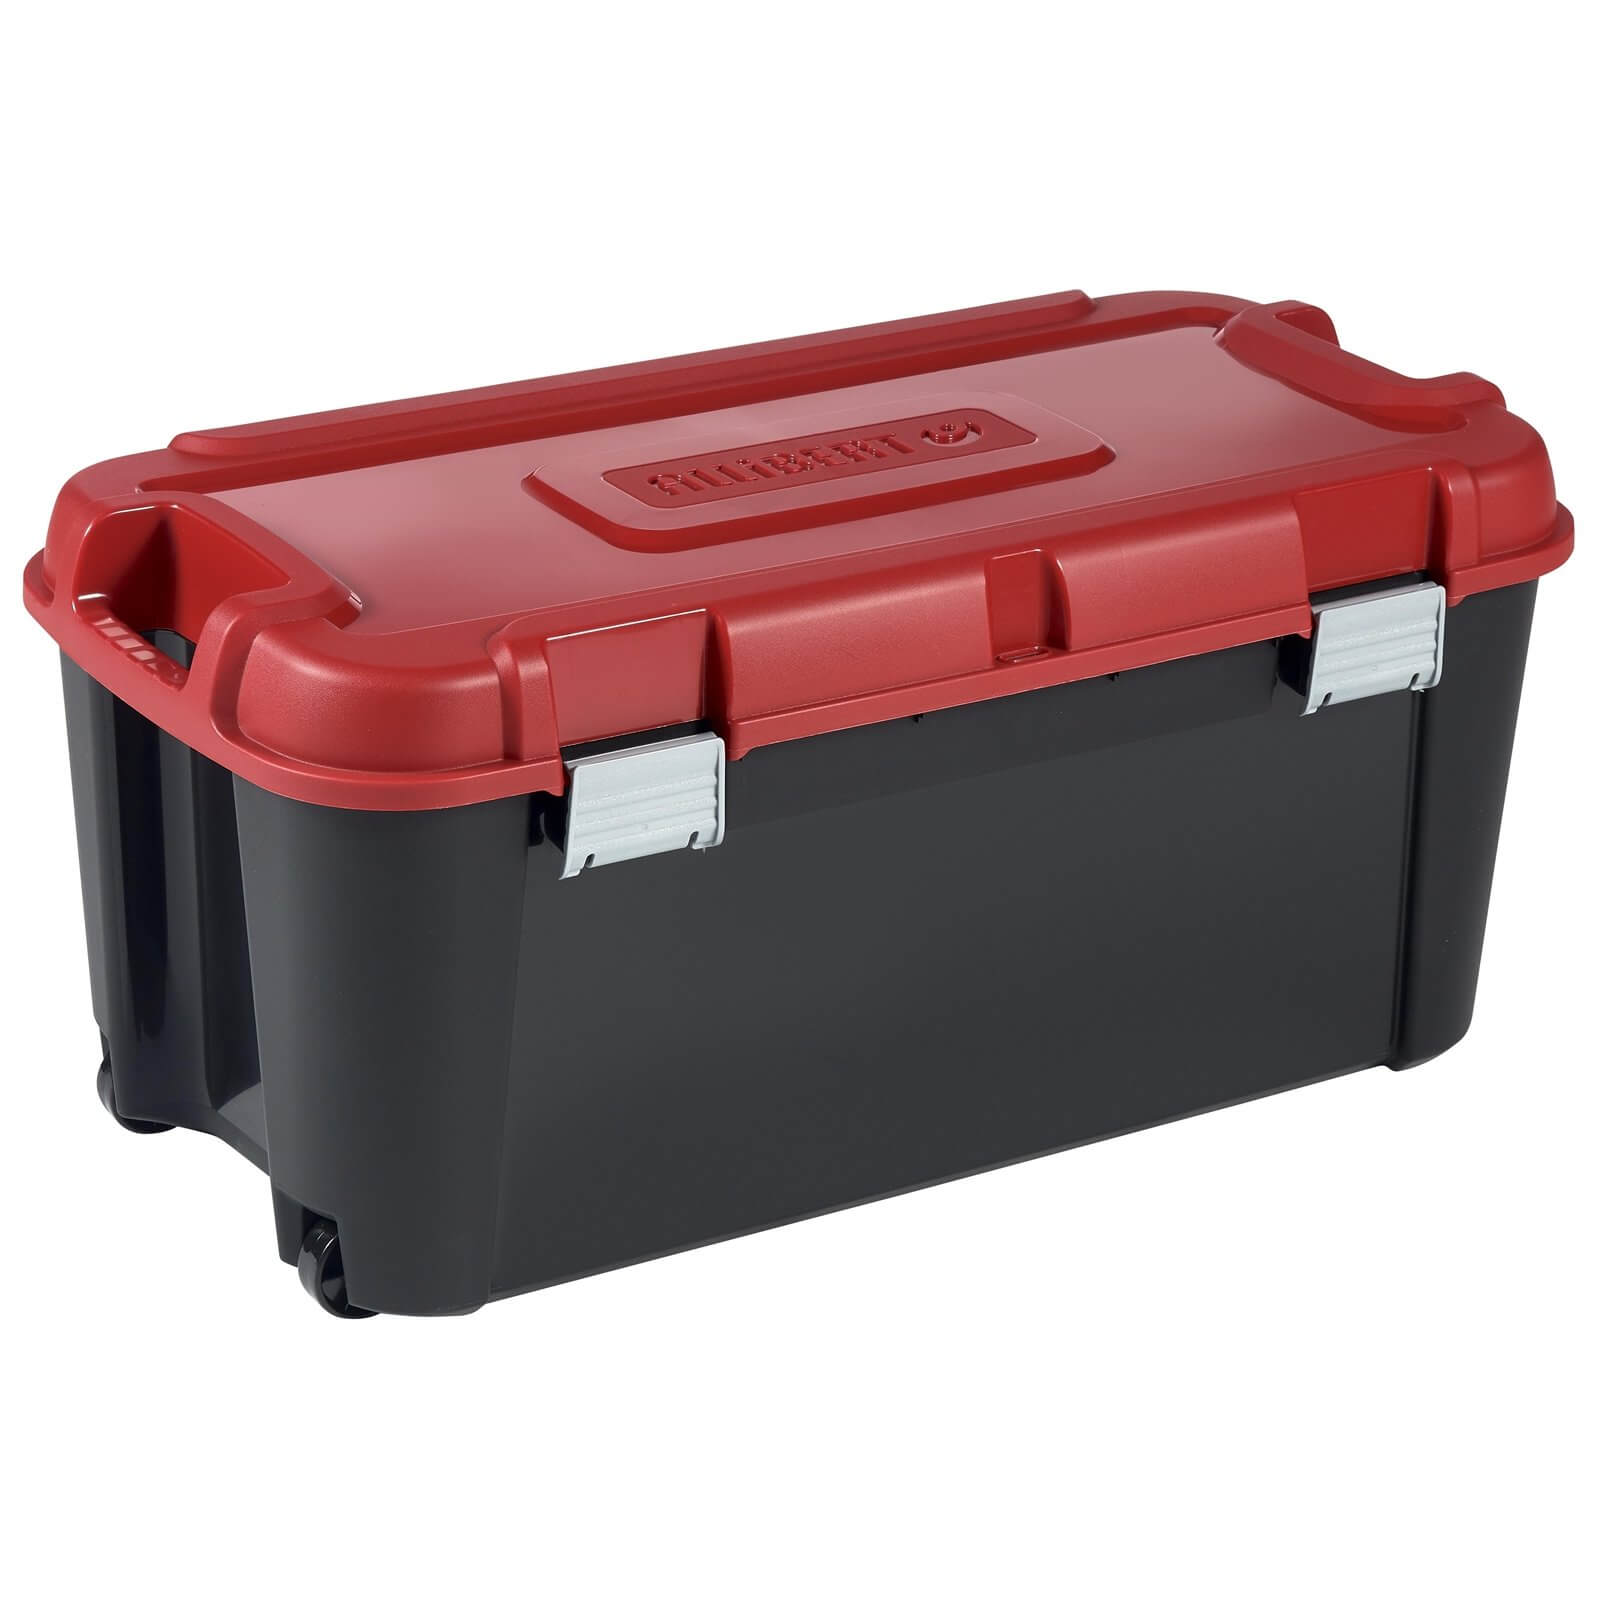 Photo of Allibert By Curver Totem Heavy Duty Plastic Storage Box -red & Black - 80l